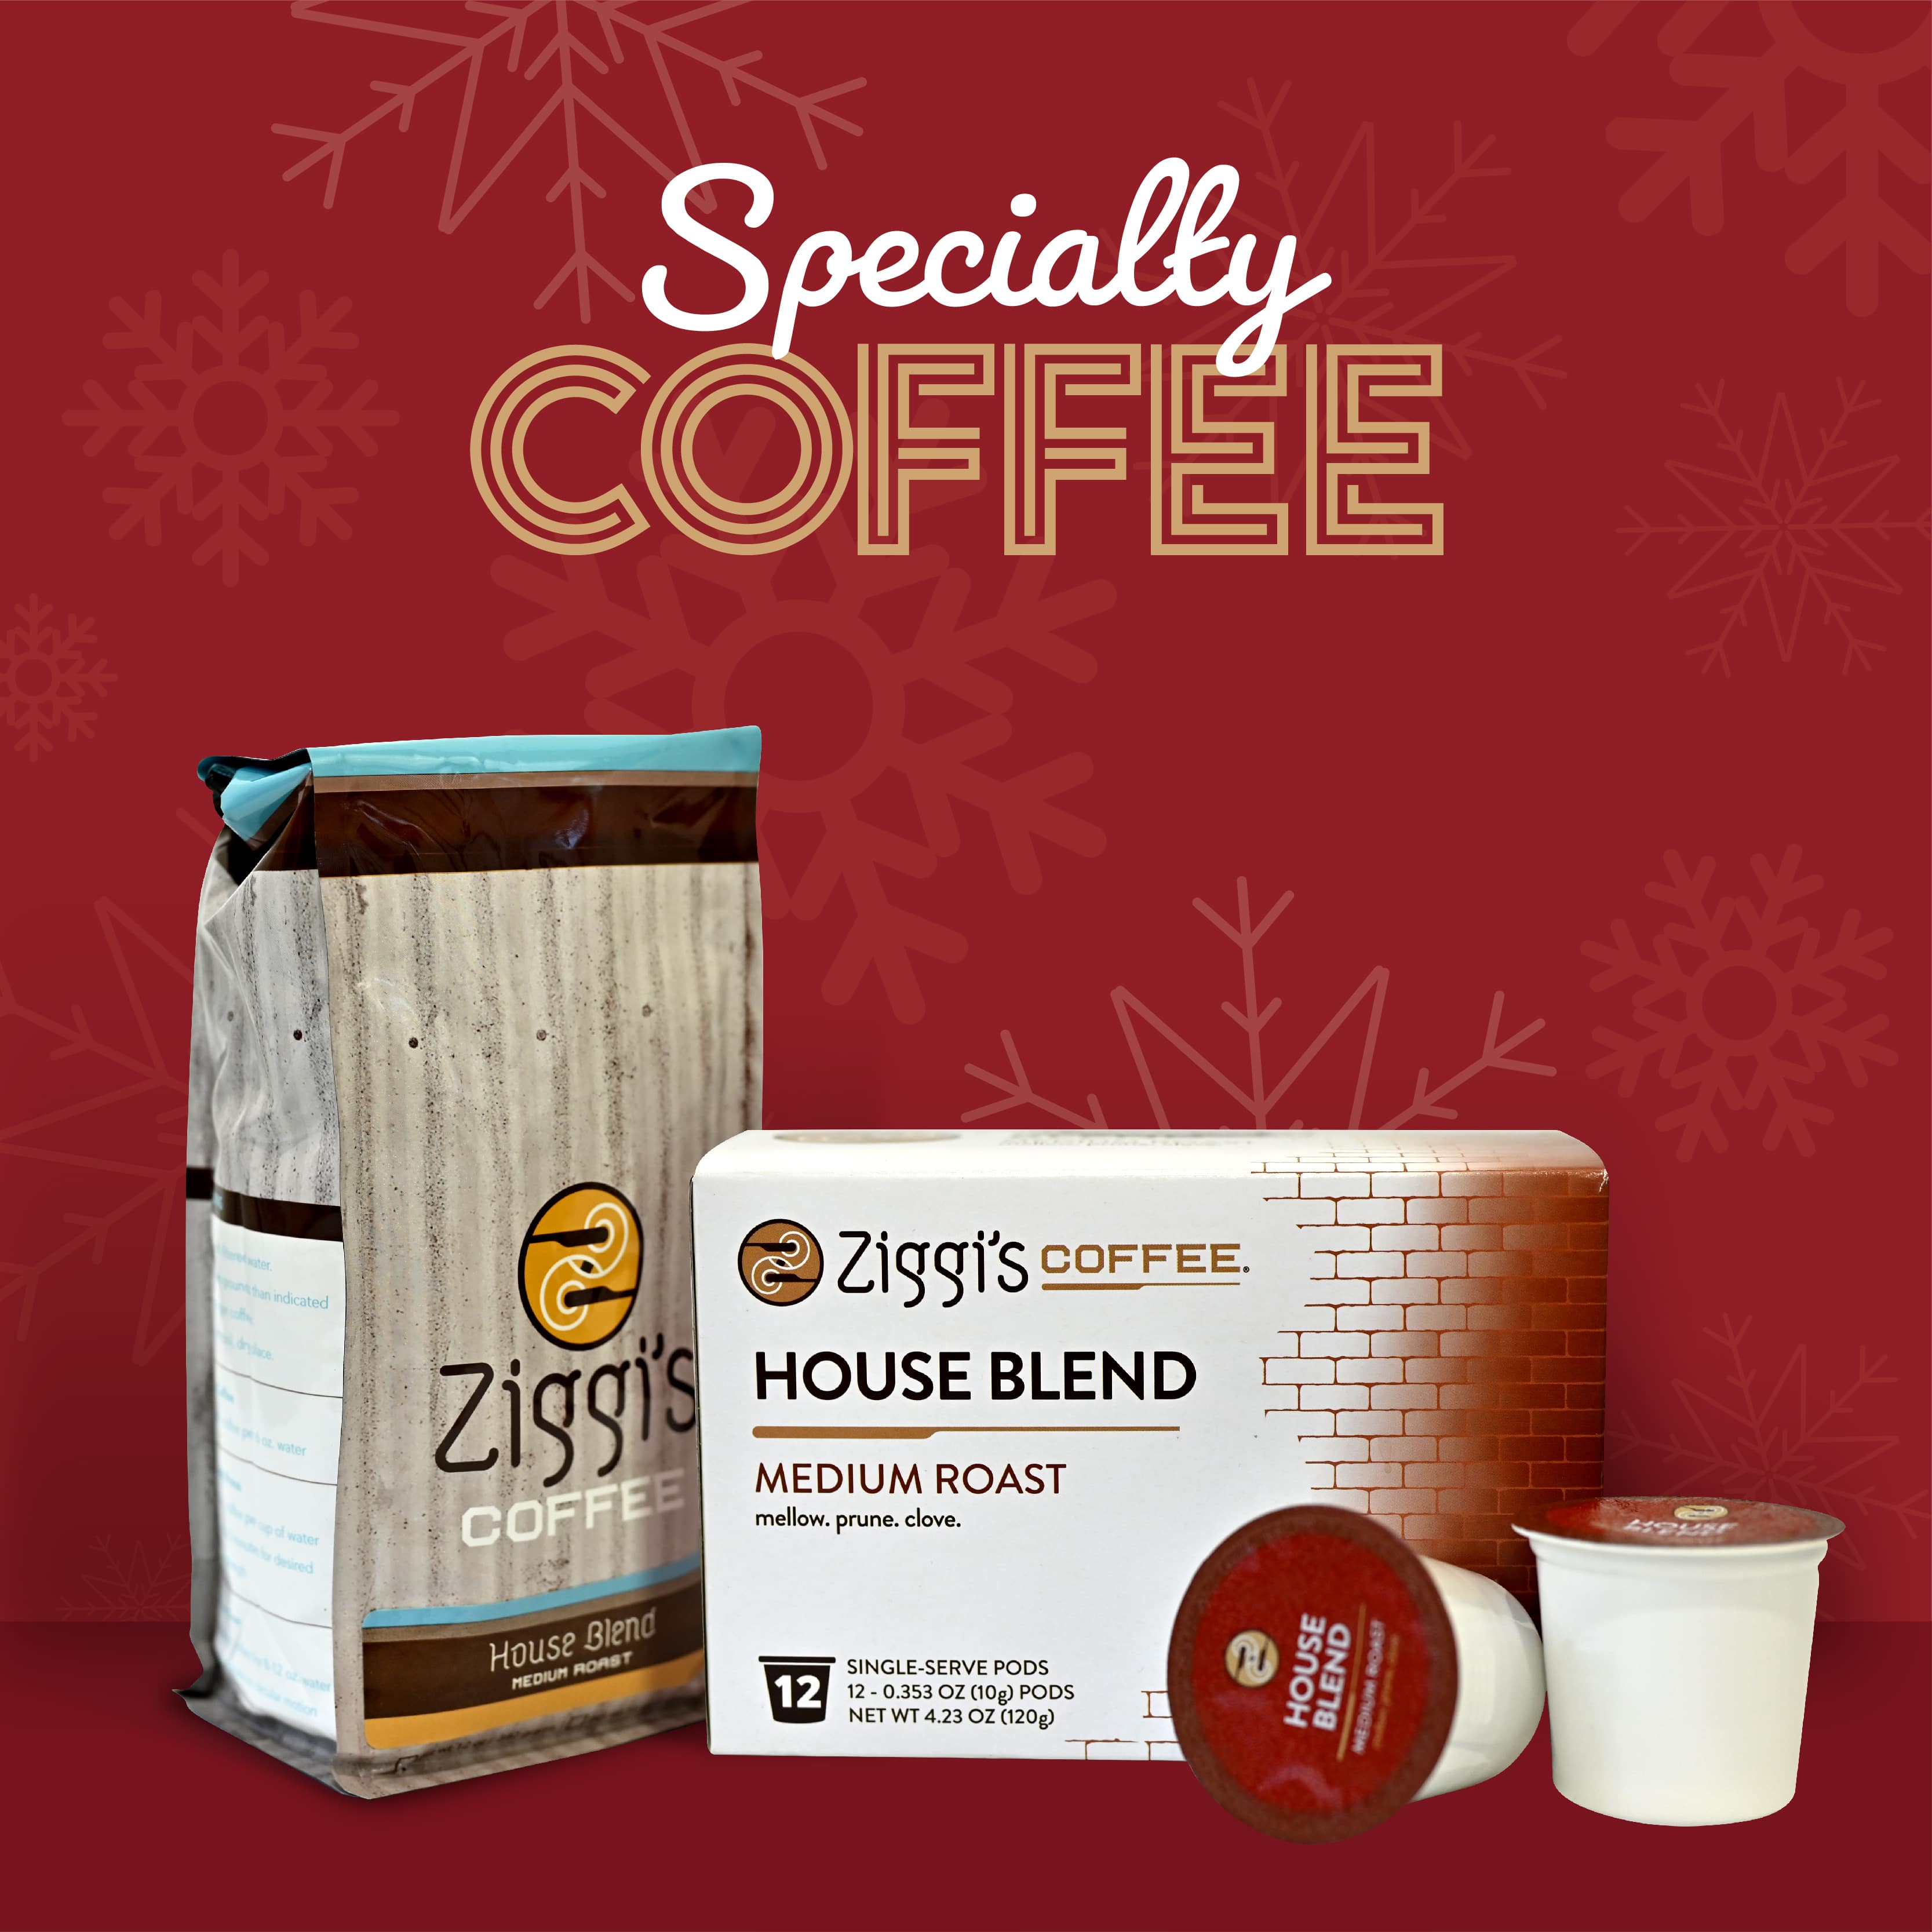 Whole bean coffee and single serve pods at Ziggi's Coffee